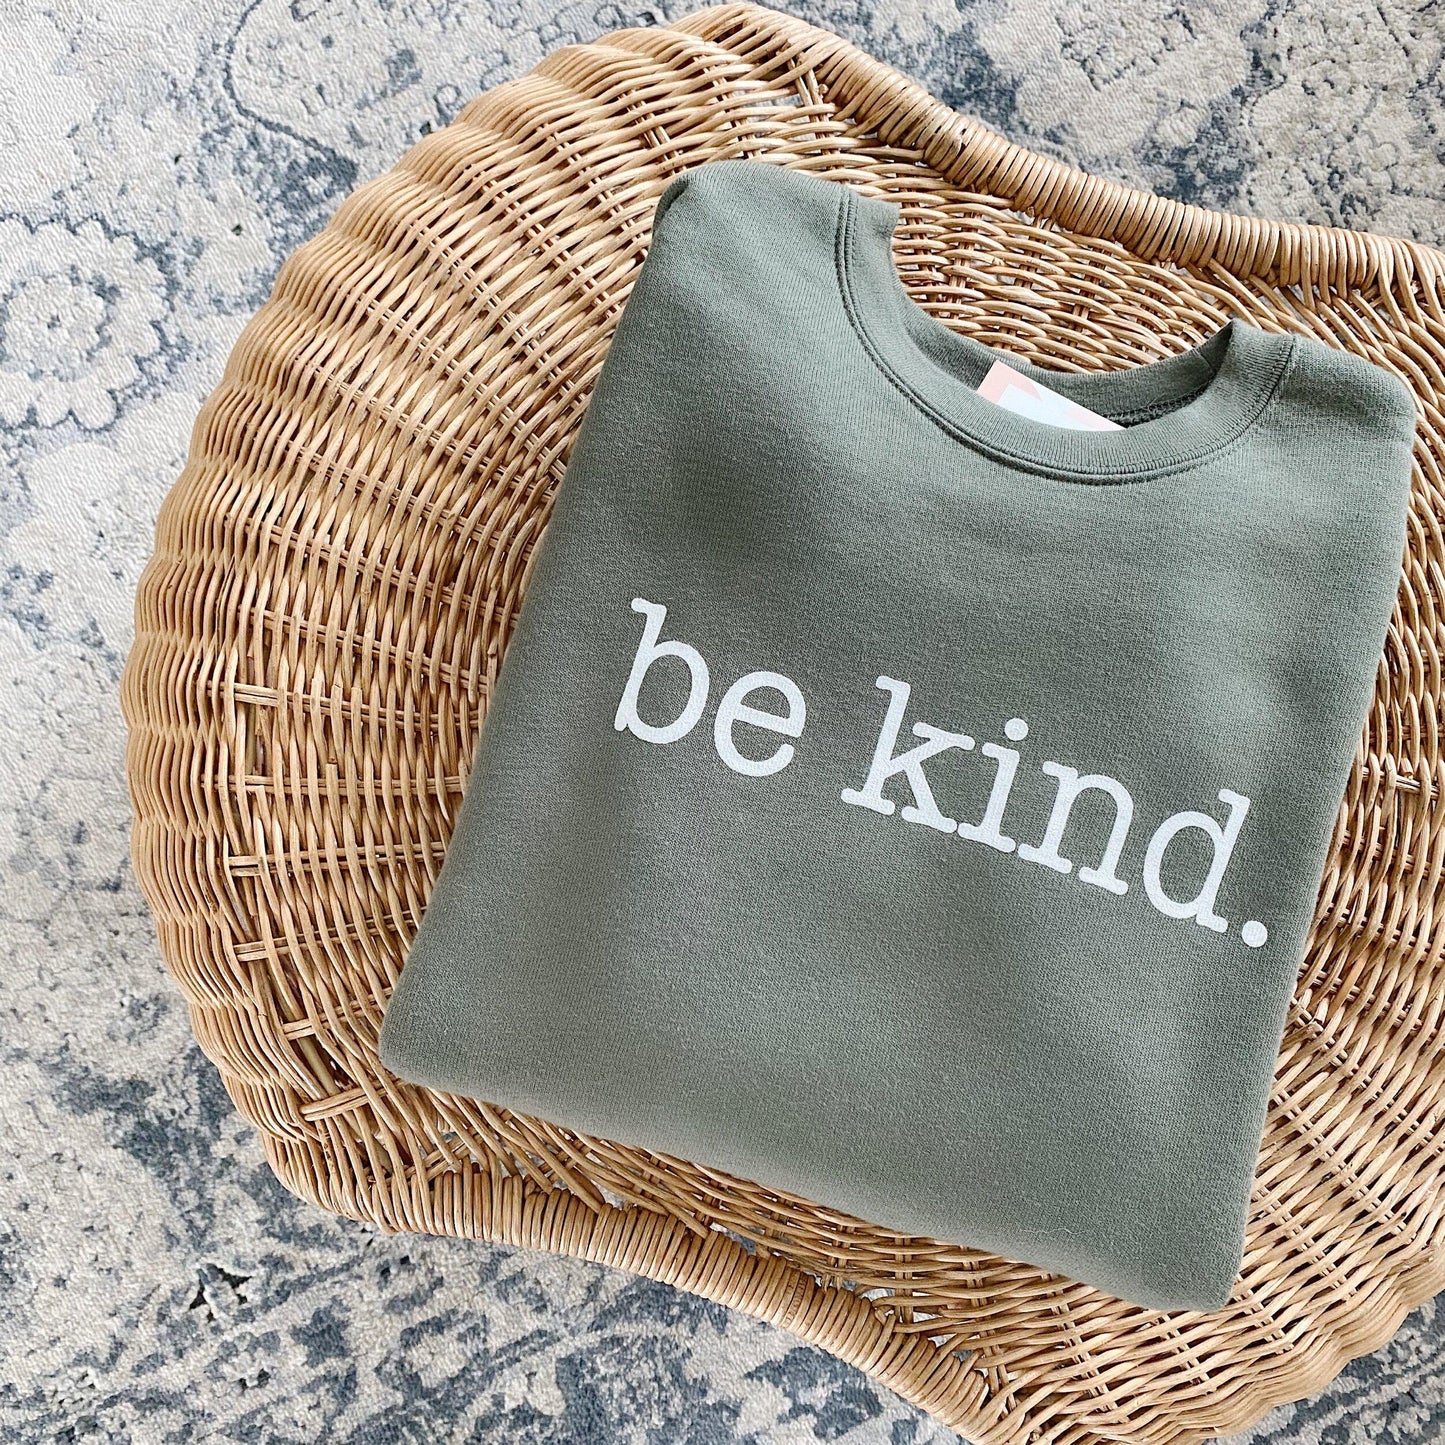 CLEARANCE!!!   Be Kind. Crewneck Sweatshirt